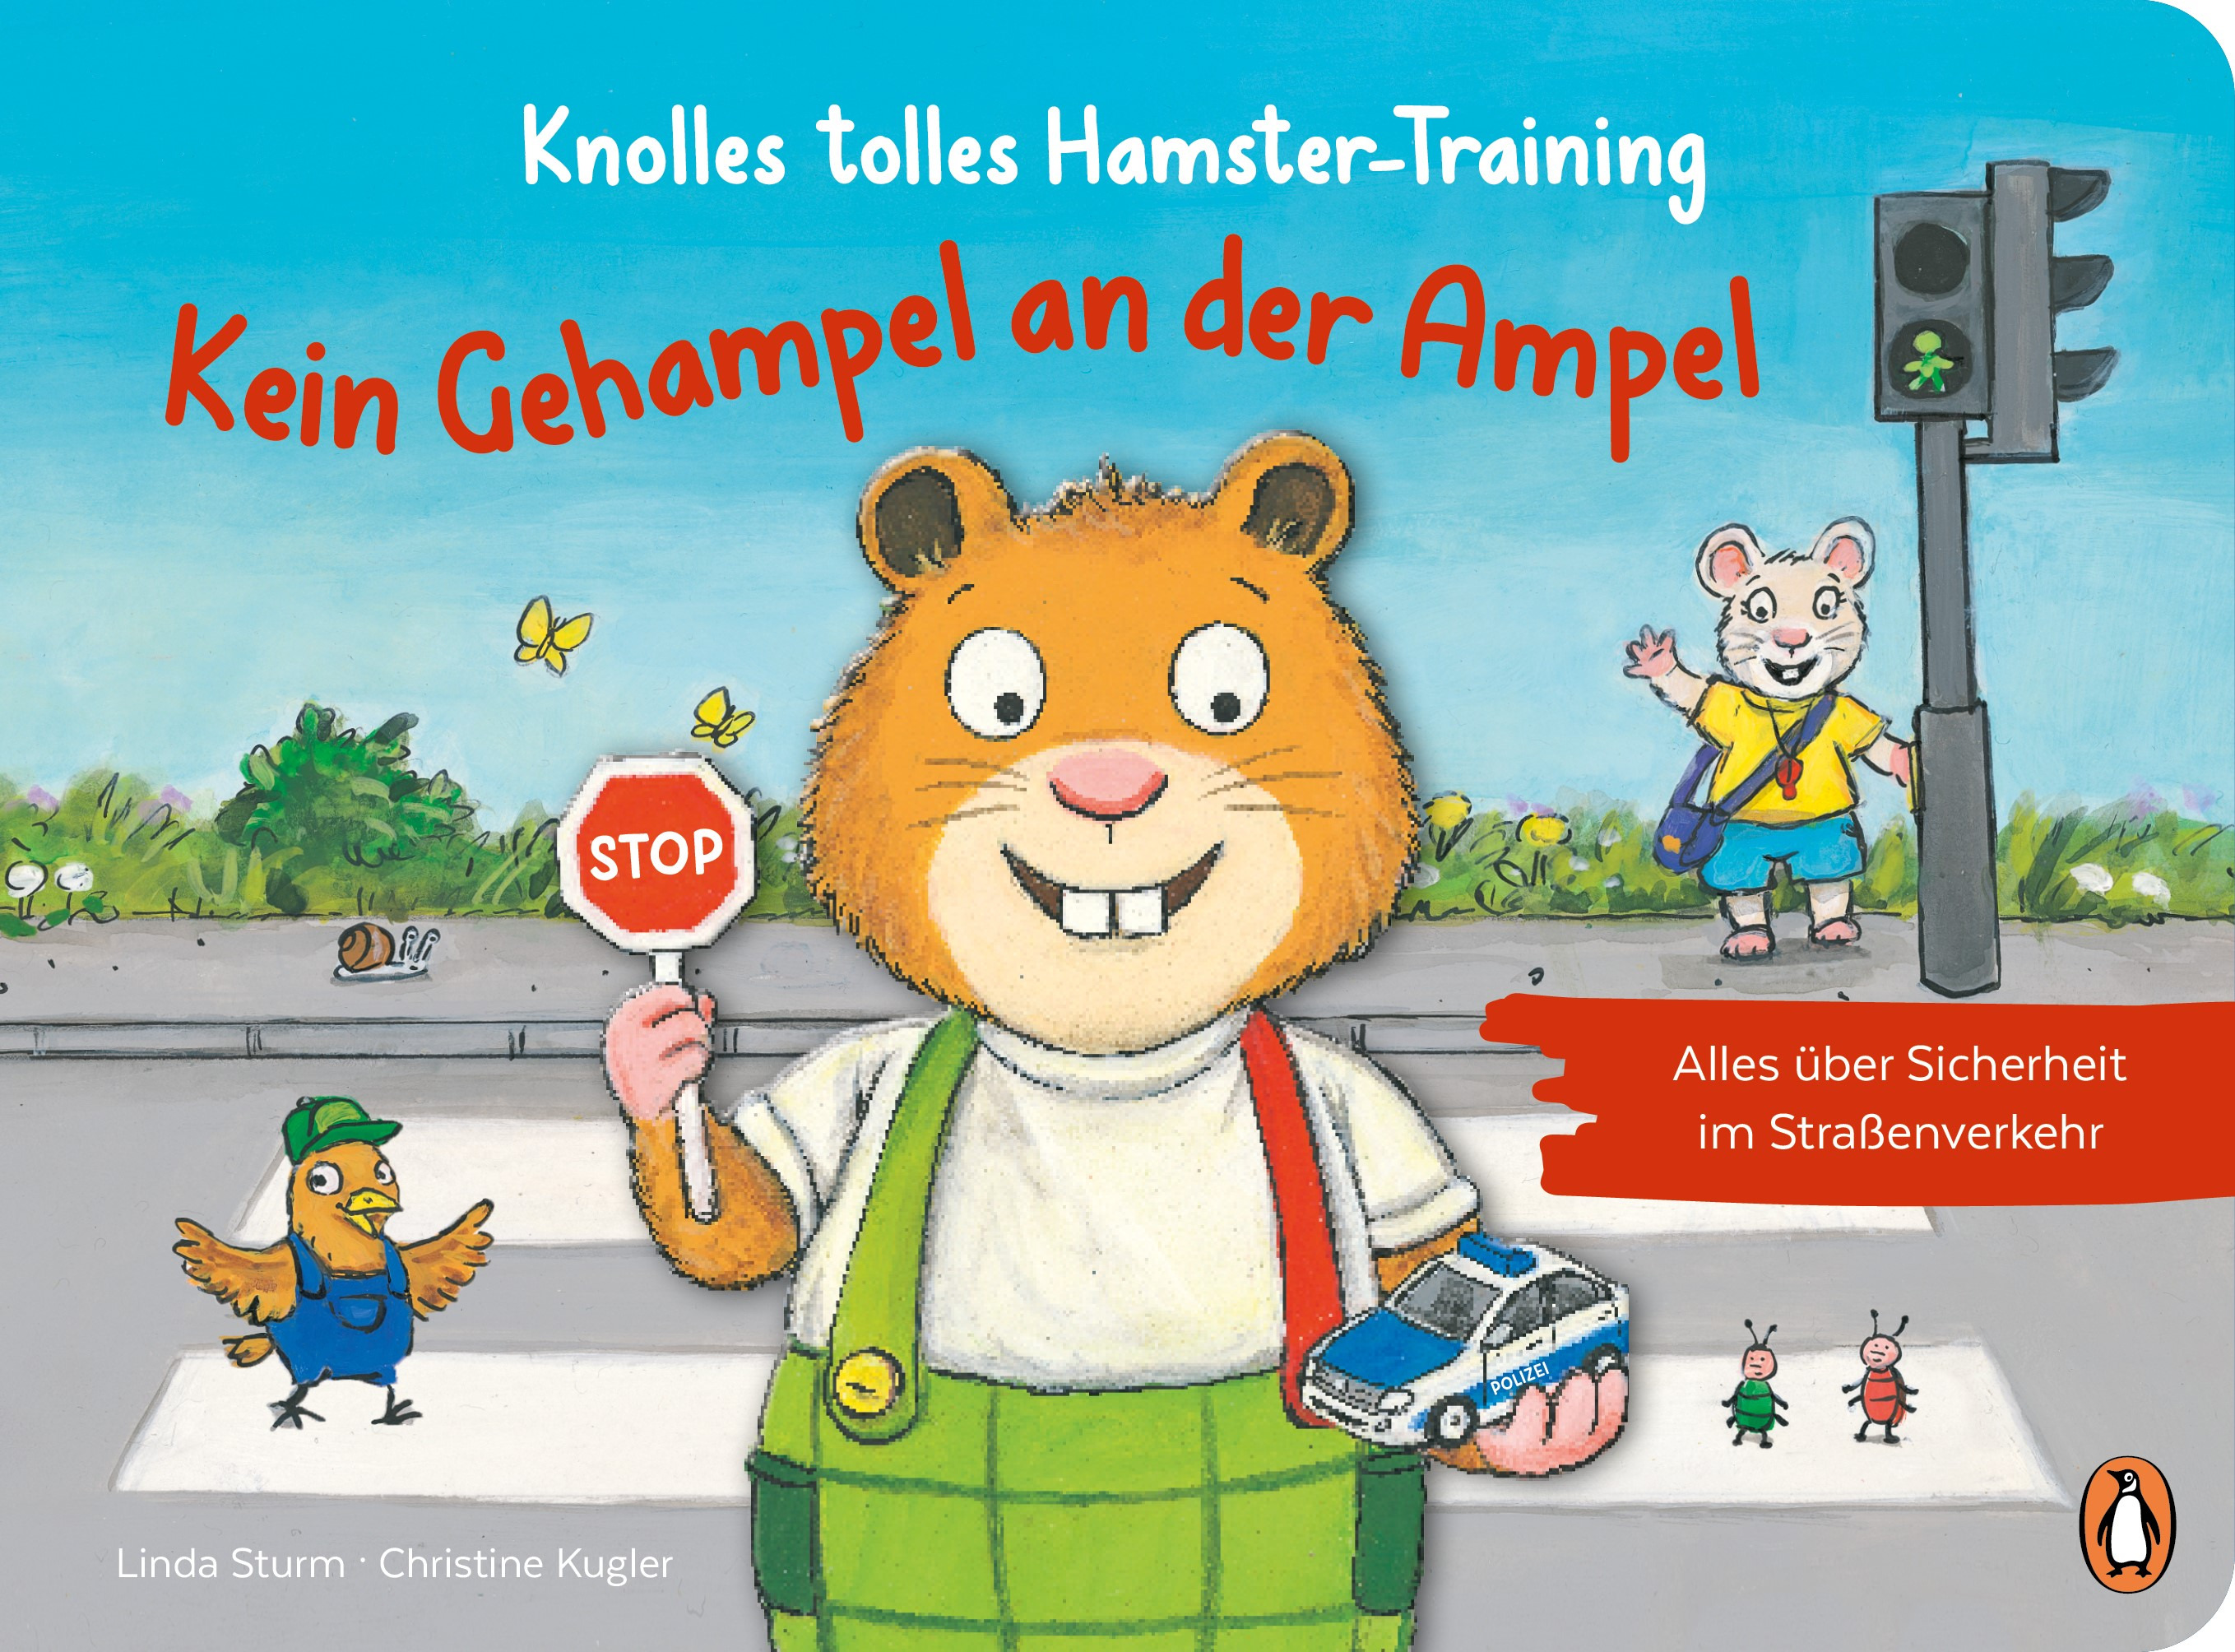 Linda Sturm: Knolles tolles Hamster-Training - Kein Gehampel an